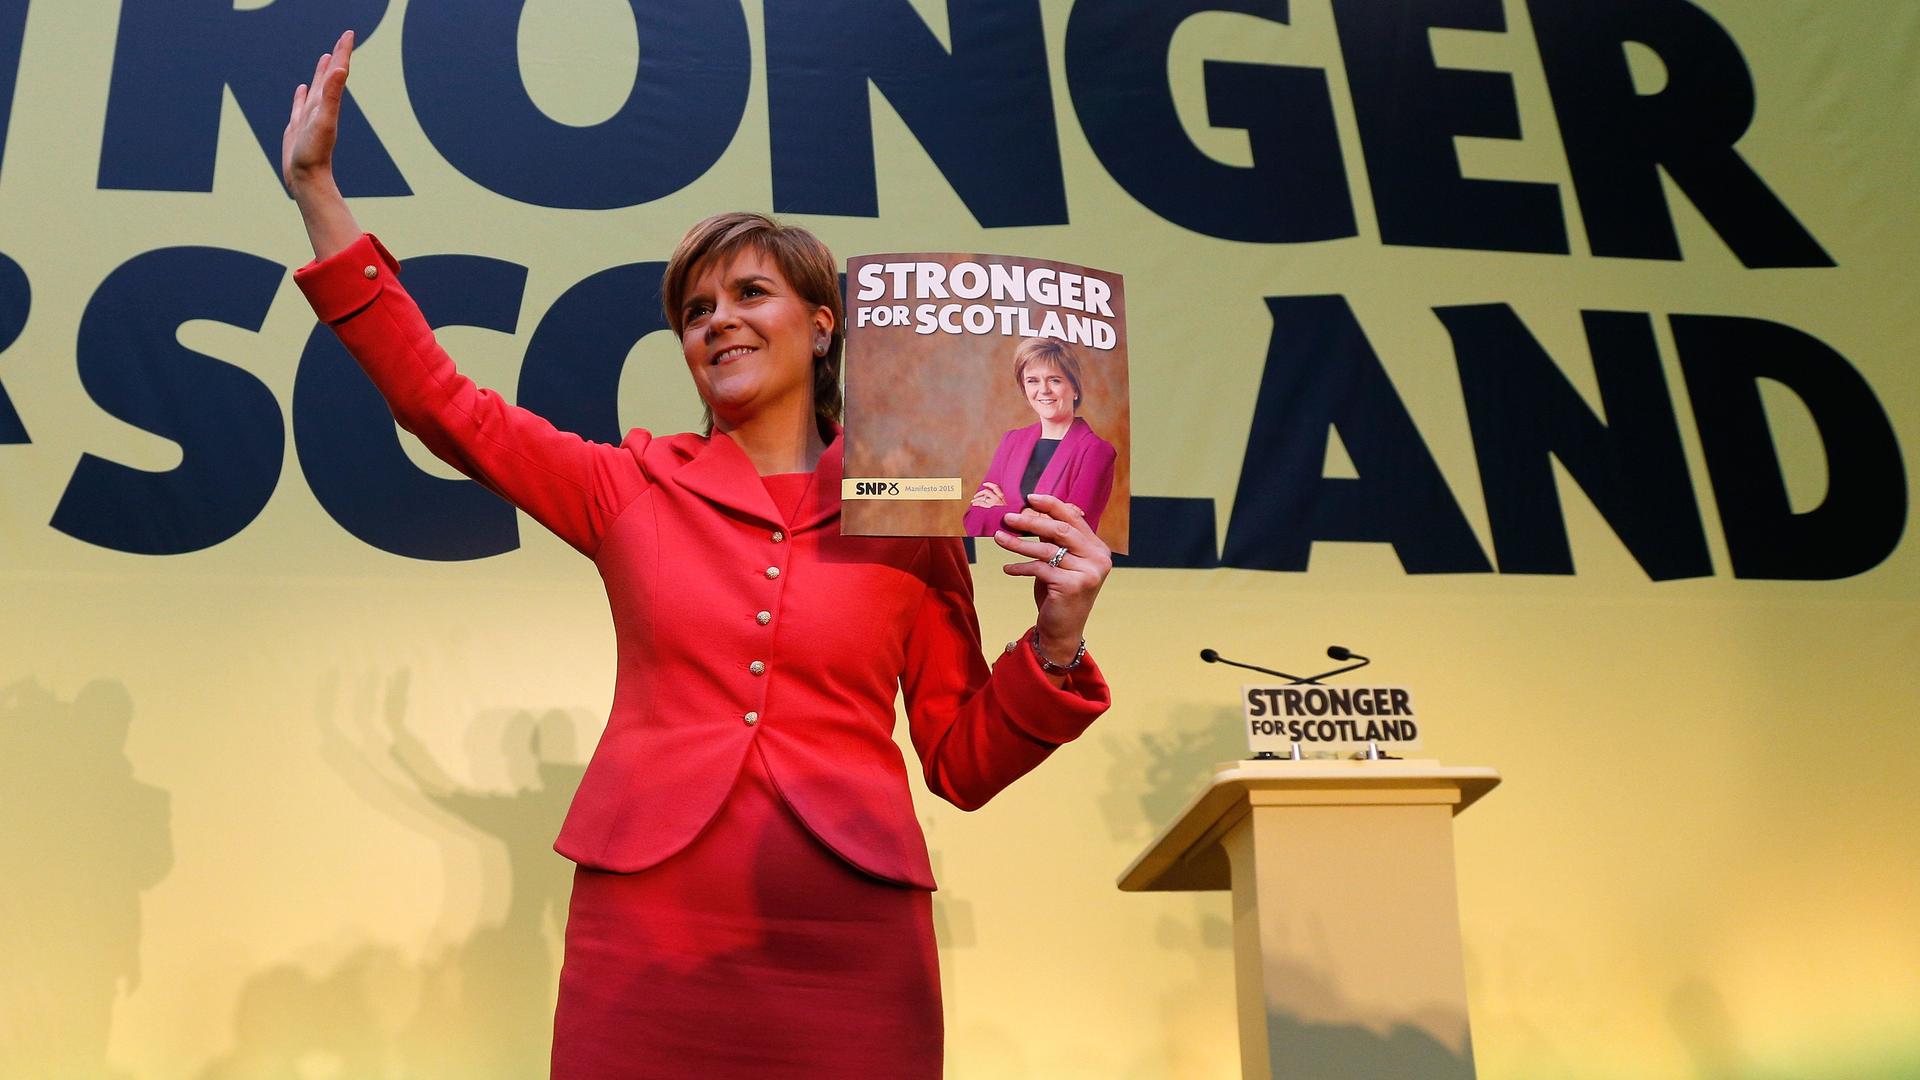 Scottish National Party leader Nicola Sturgeon display the SNP's election manifesto in Edinburgh, Scotland, on April 21, 2015.